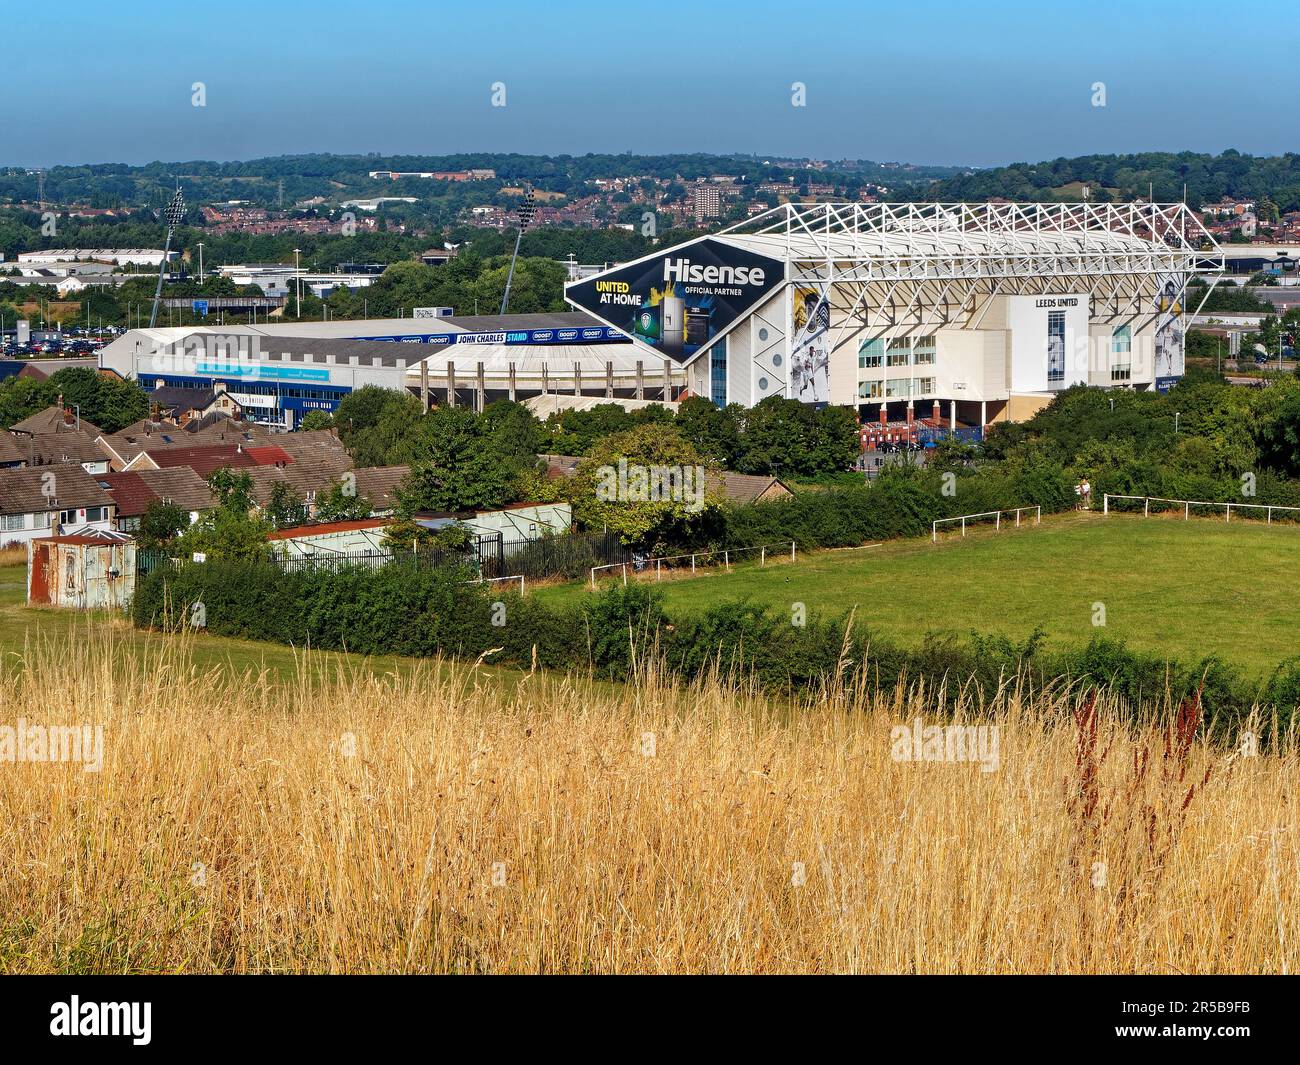 Regno Unito, West Yorkshire, Leeds, Elland Road Stadium, sede del Leeds United FC. Foto Stock